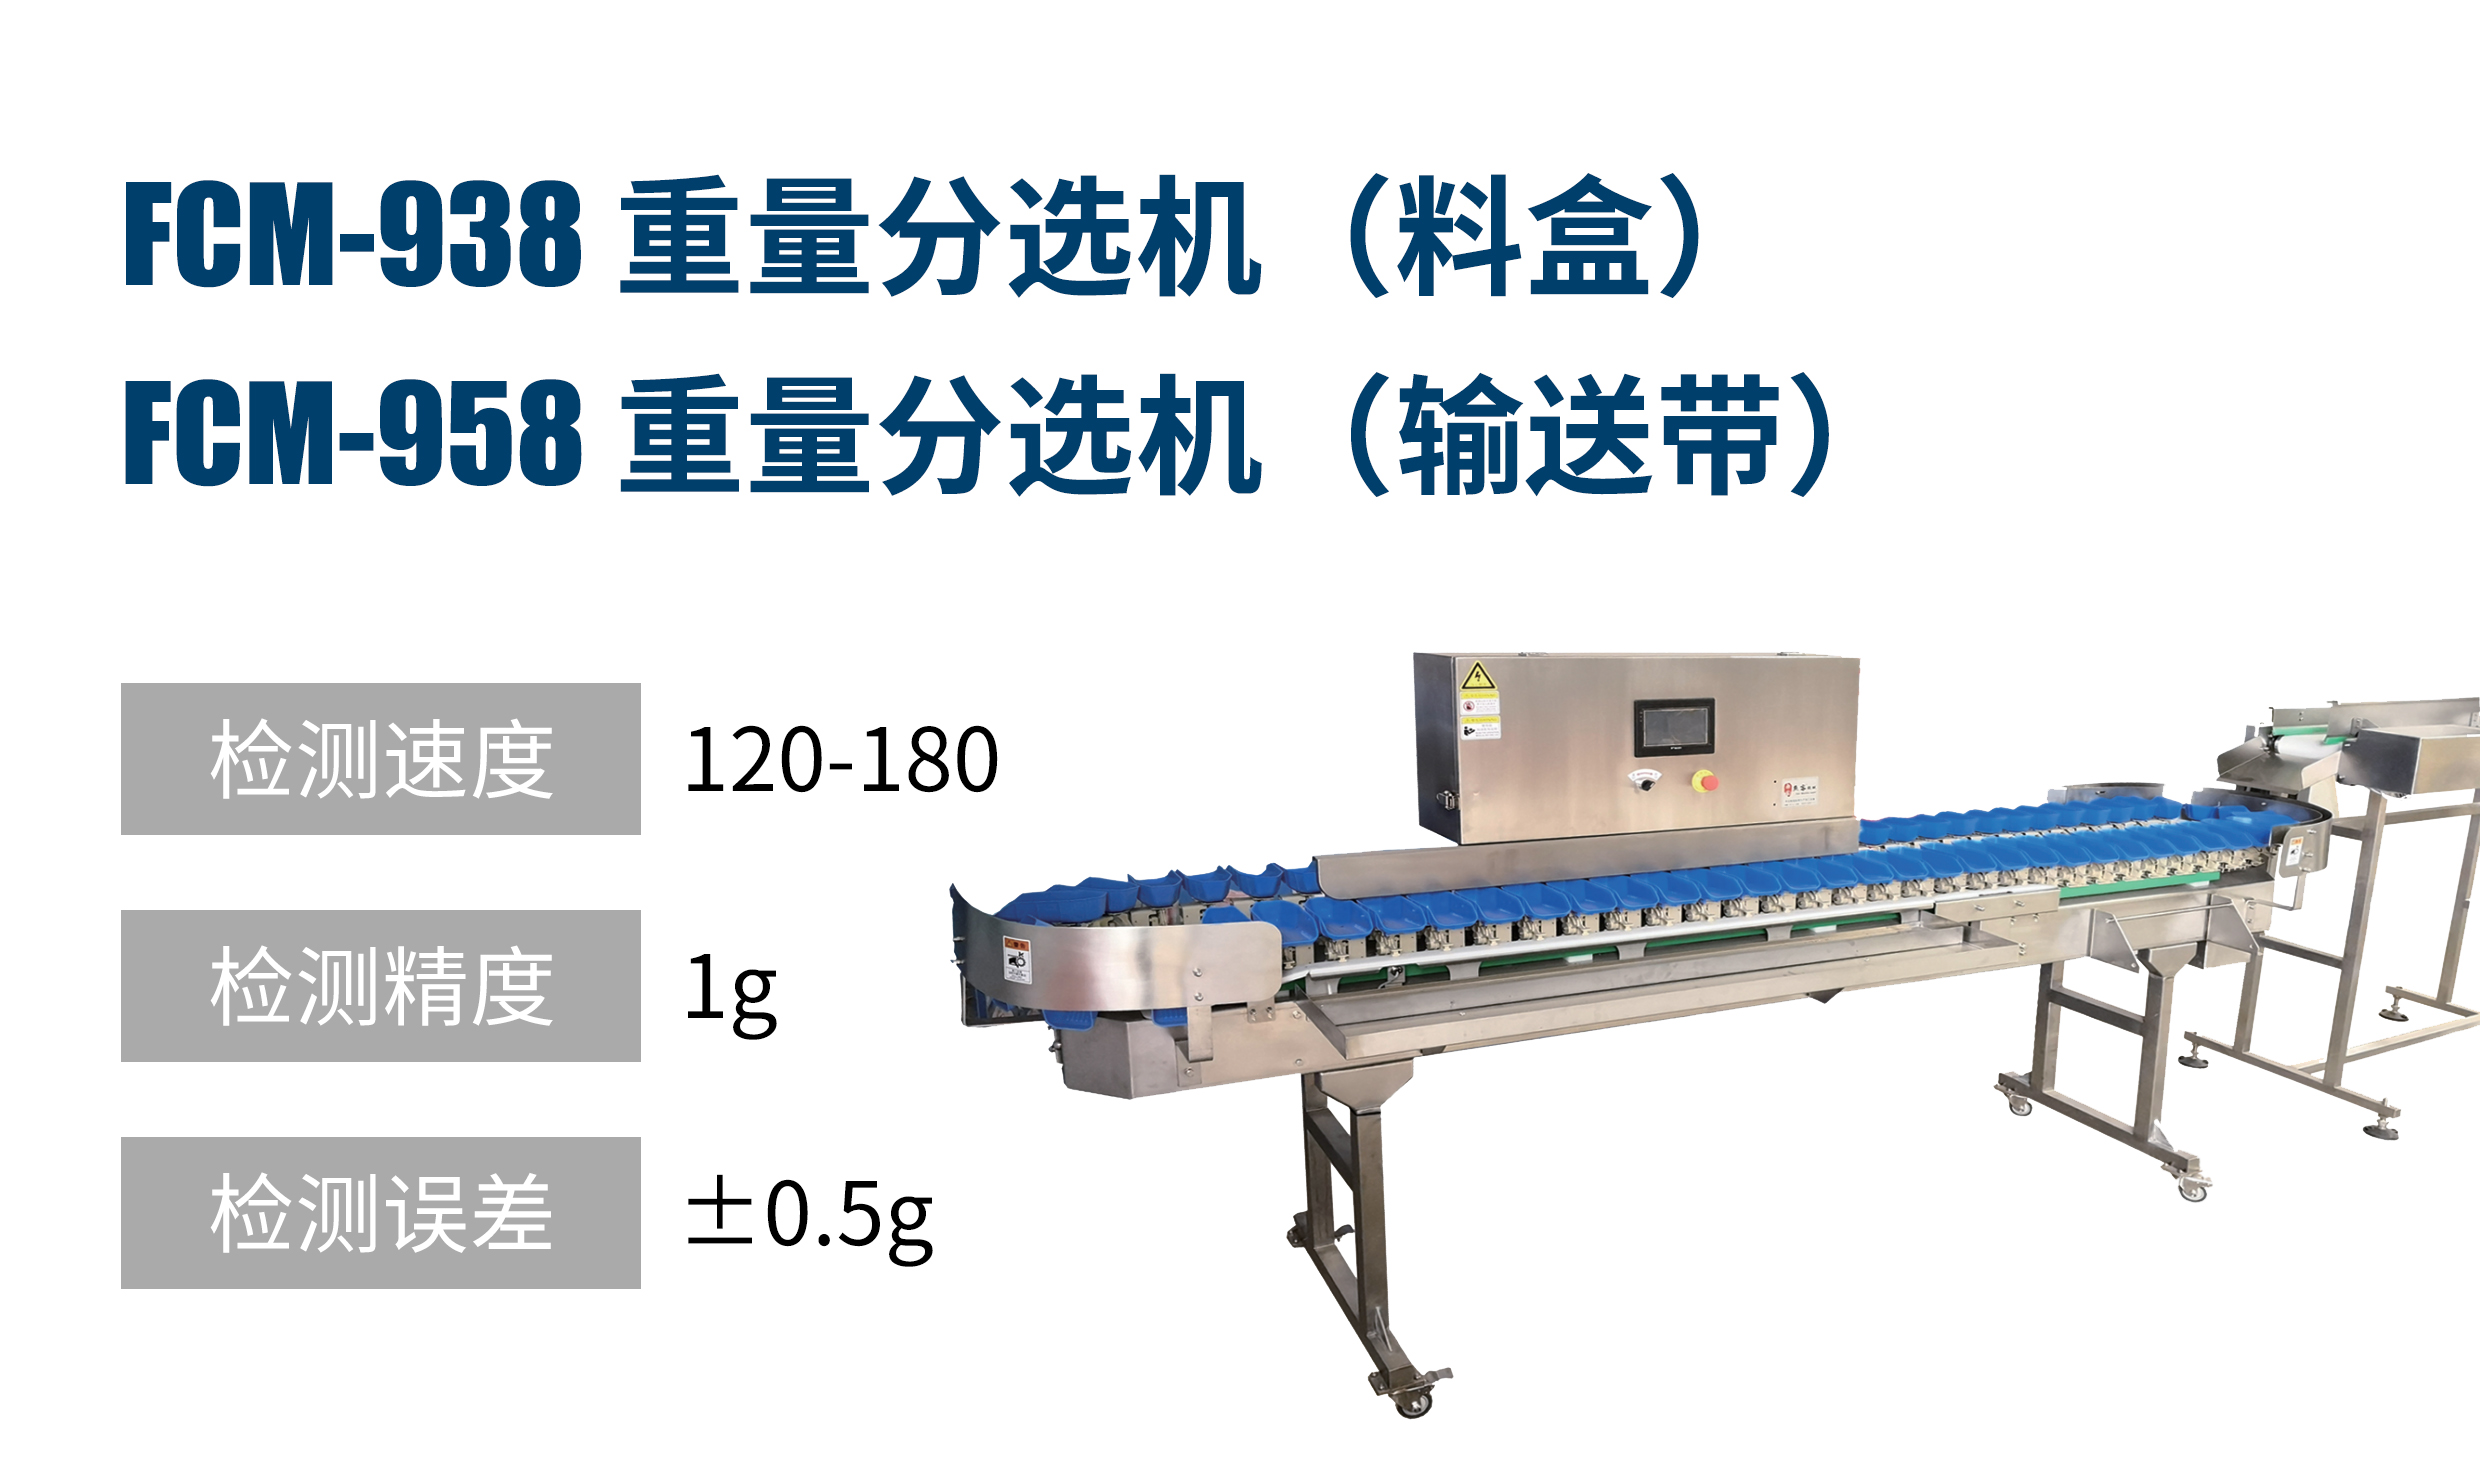 Weight separator (material box, conveyor belt)